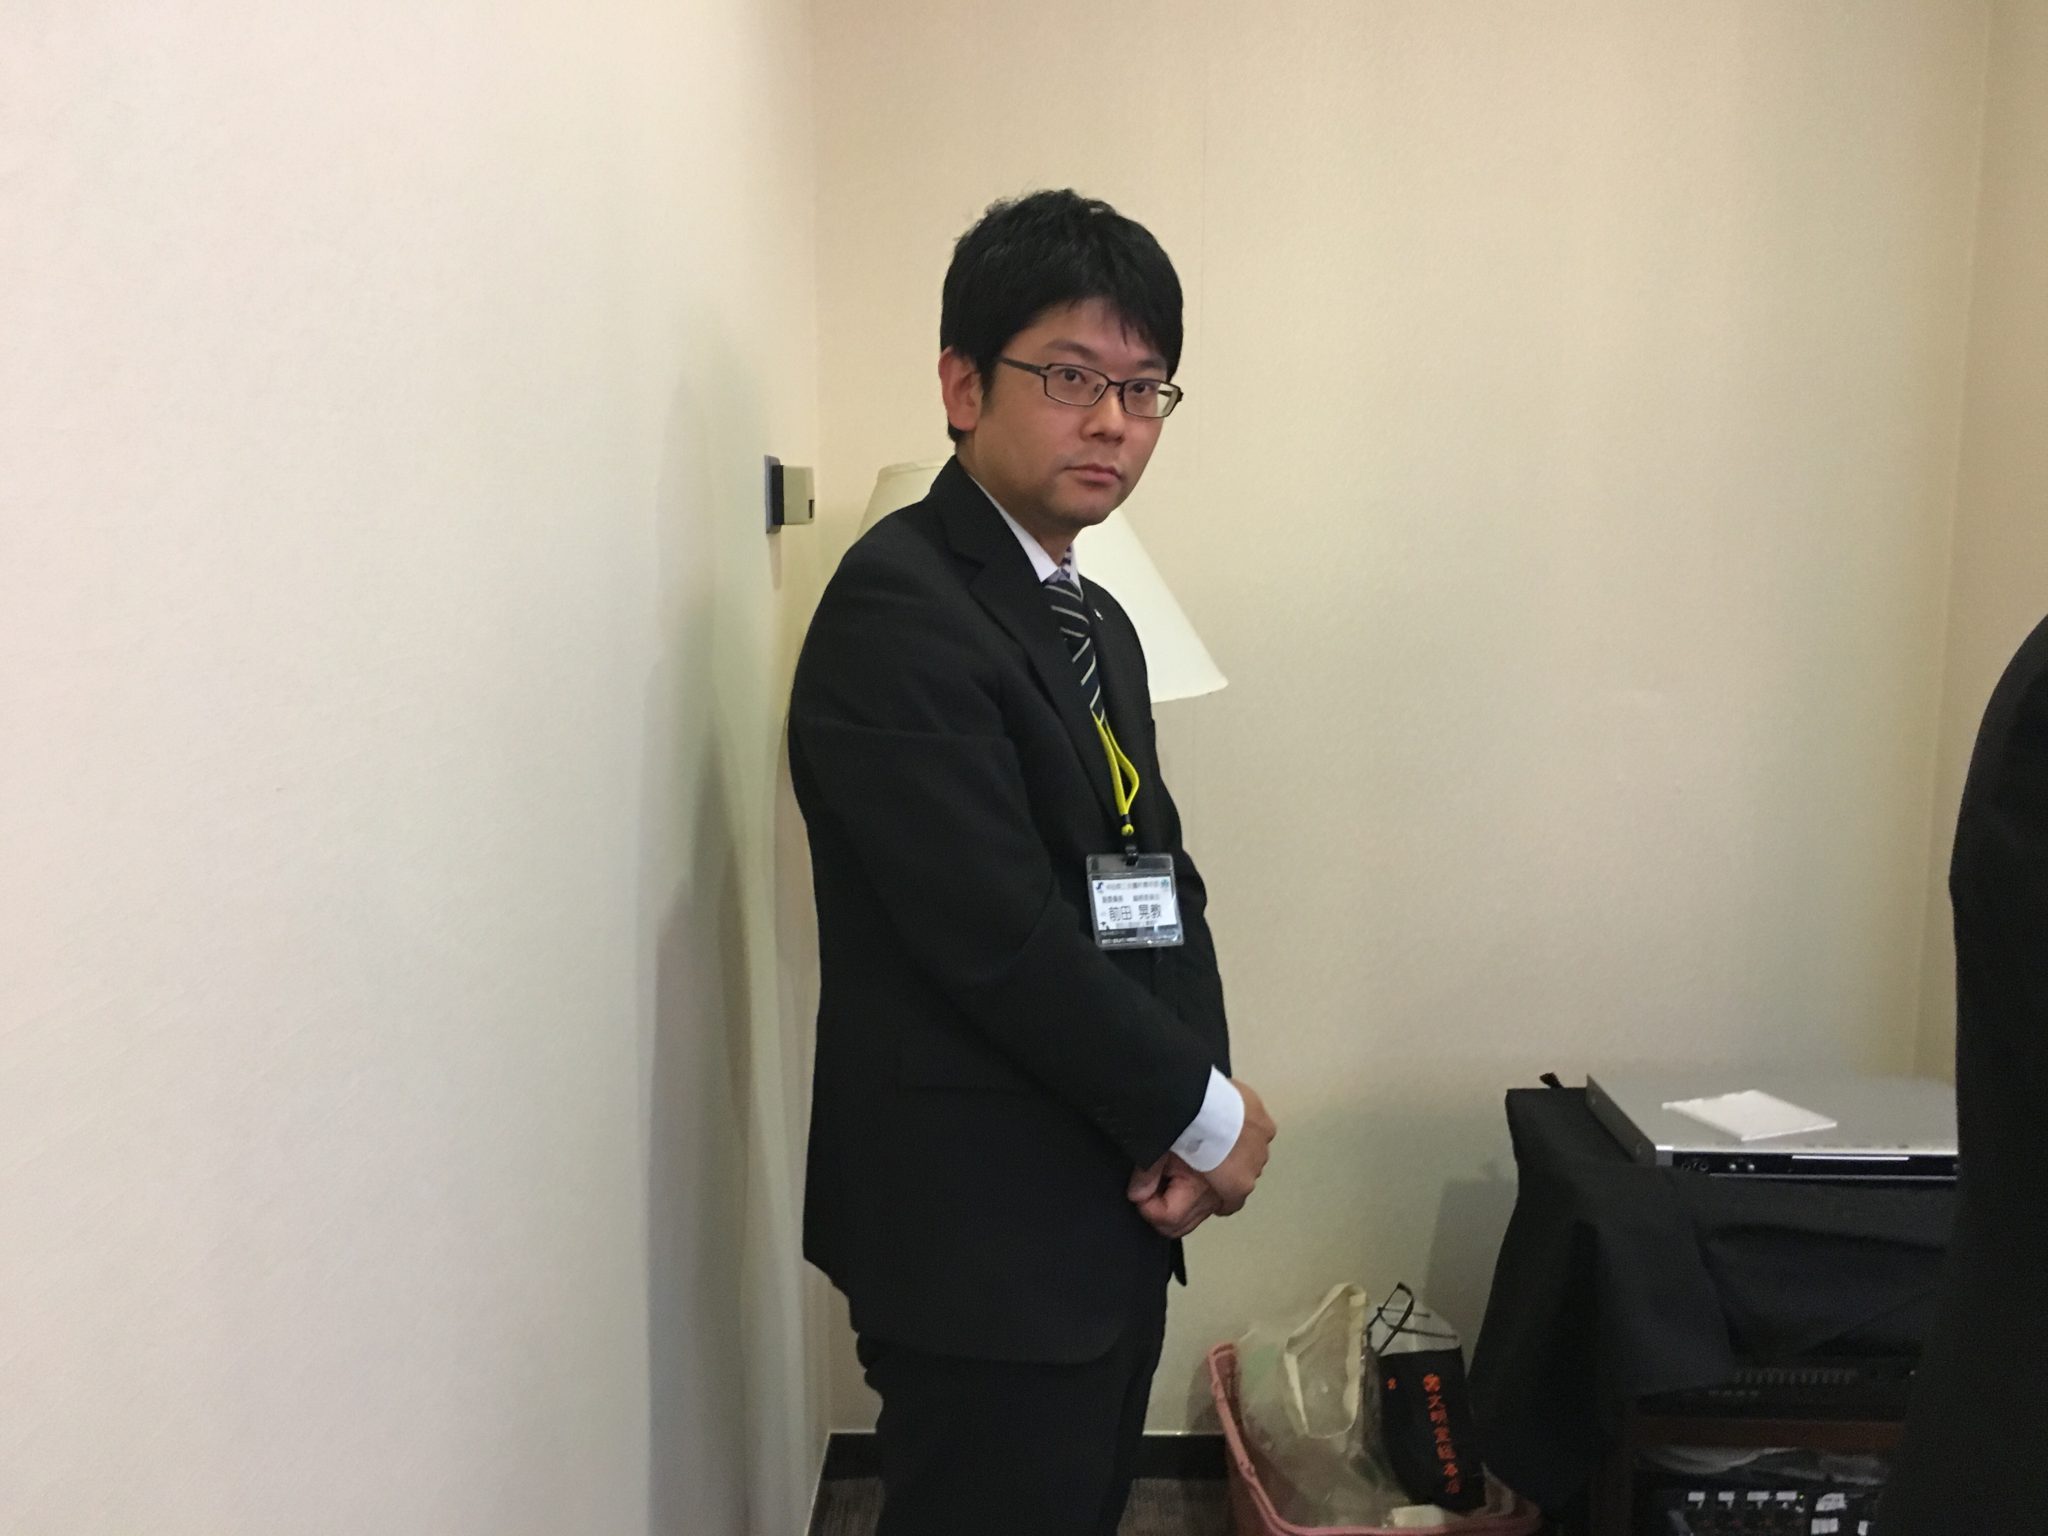 司会の裏で音響担当する前田晃教副委員長